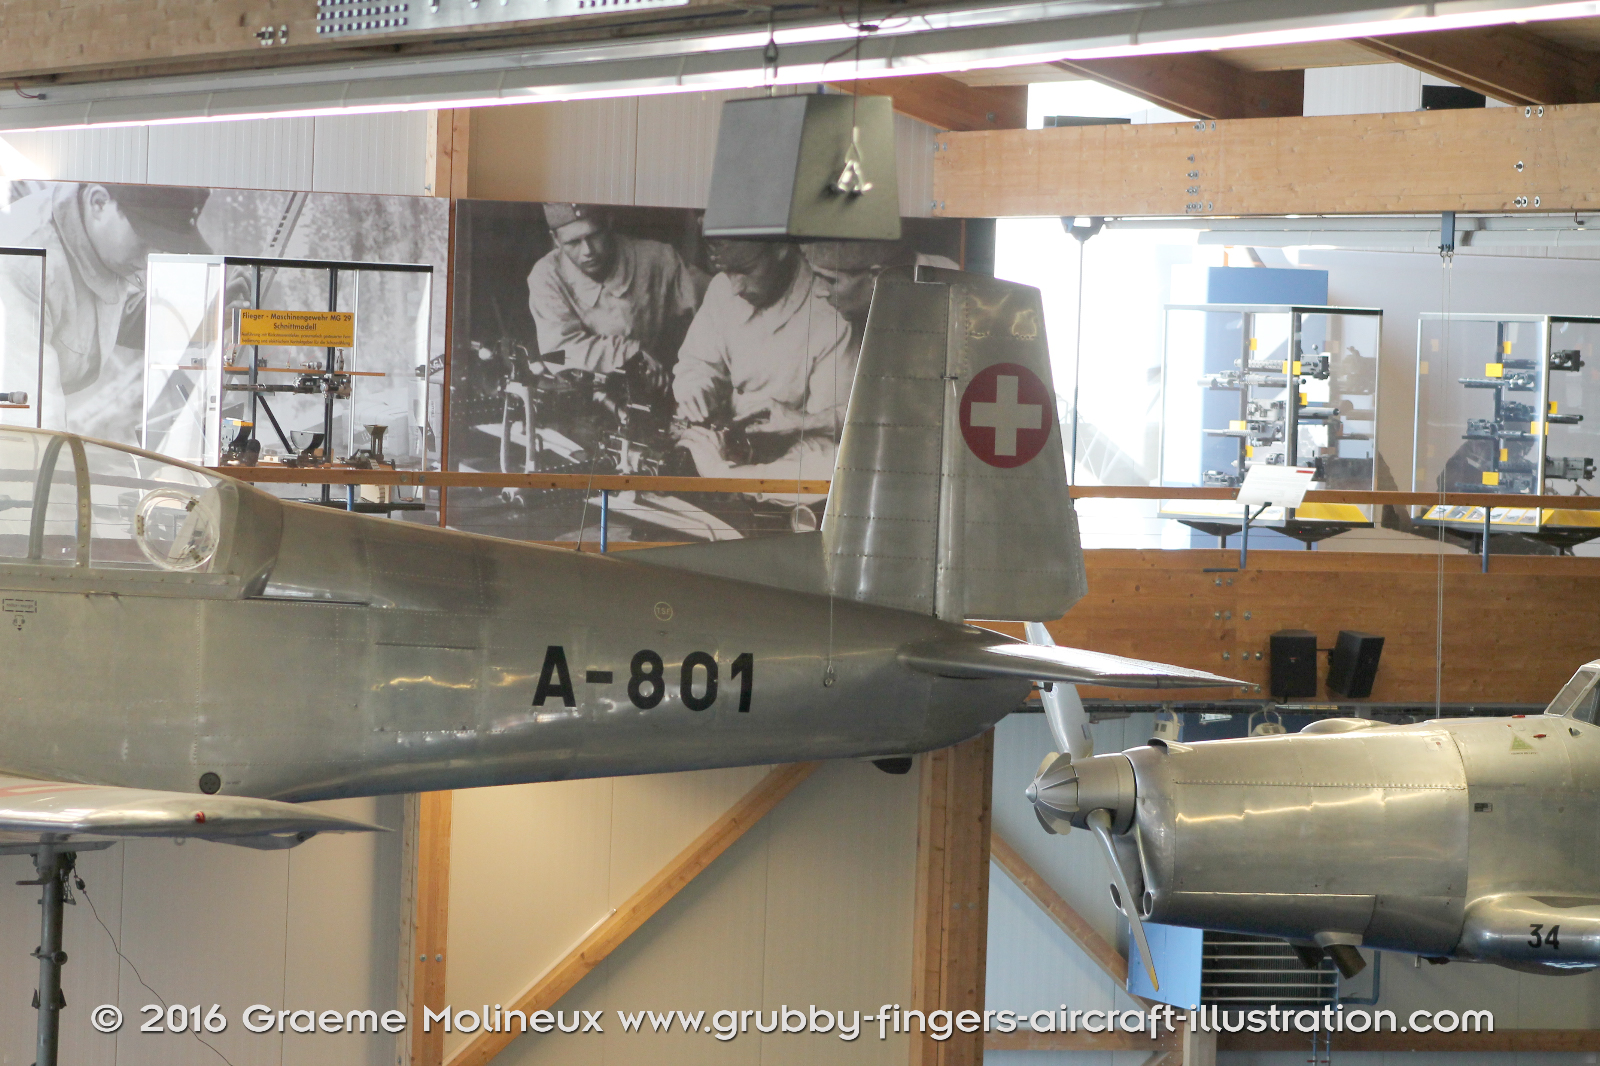 PILATUS_P-2_A-801_Swiss_Air_Force_Museum_2015_05_GrubbyFingers